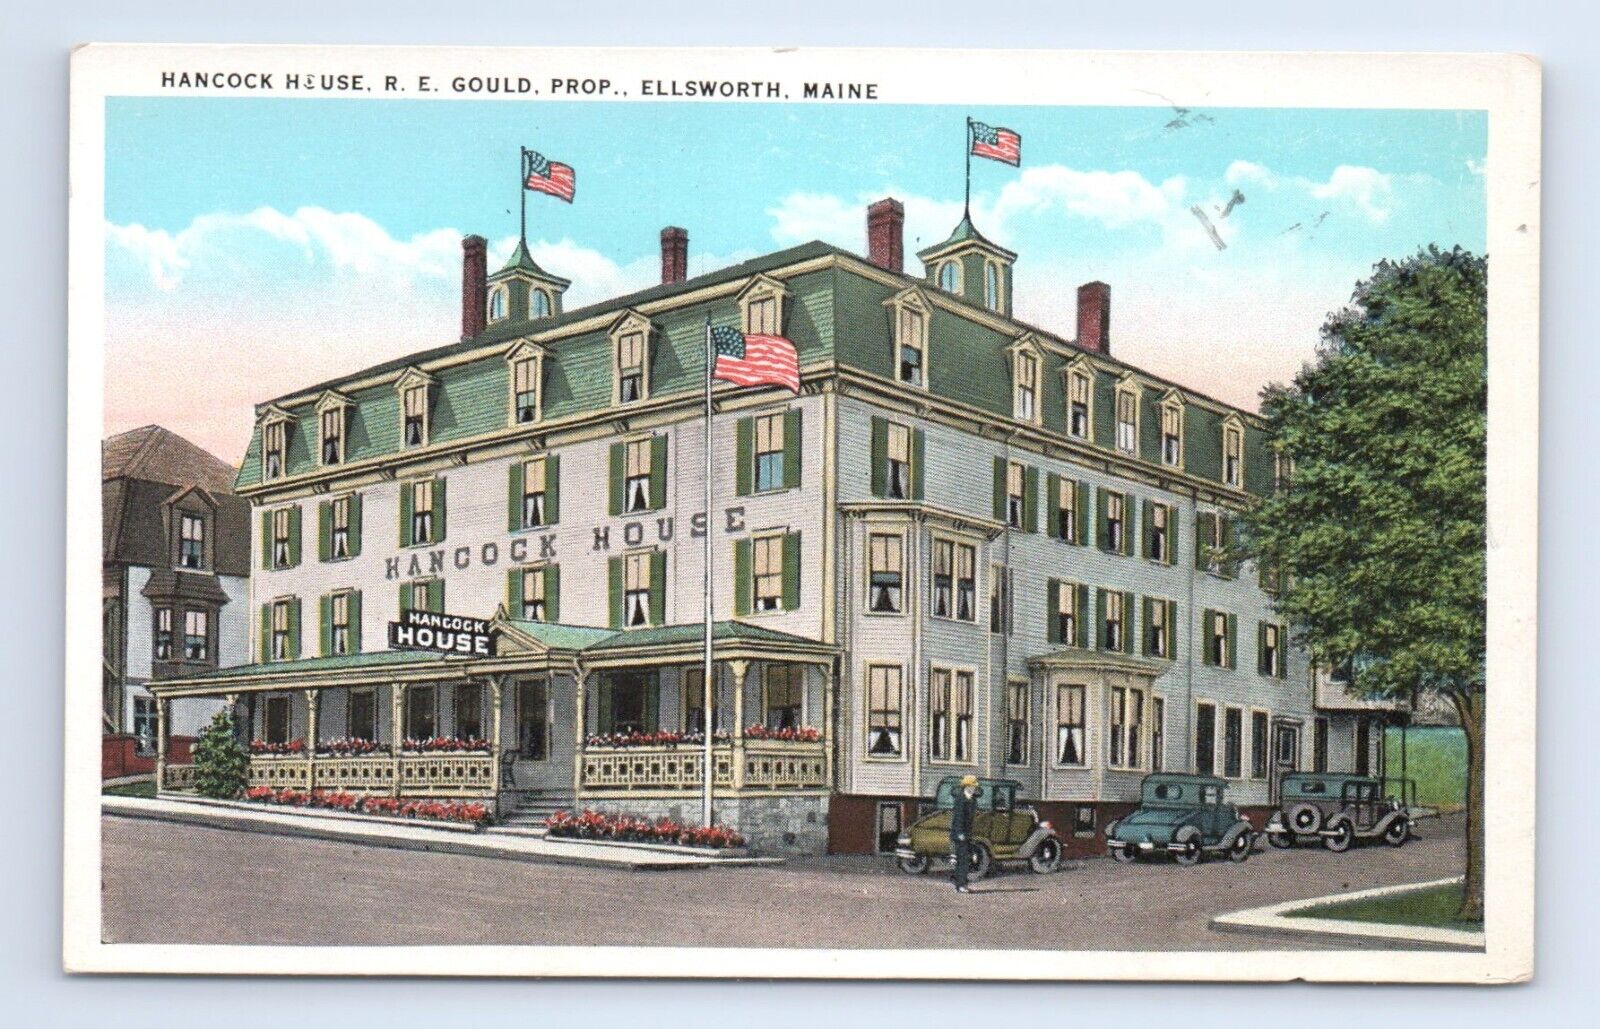 R.E. Gould Proprietor Hancock House Hotel Ellsworth Maine Postcard VTG ME